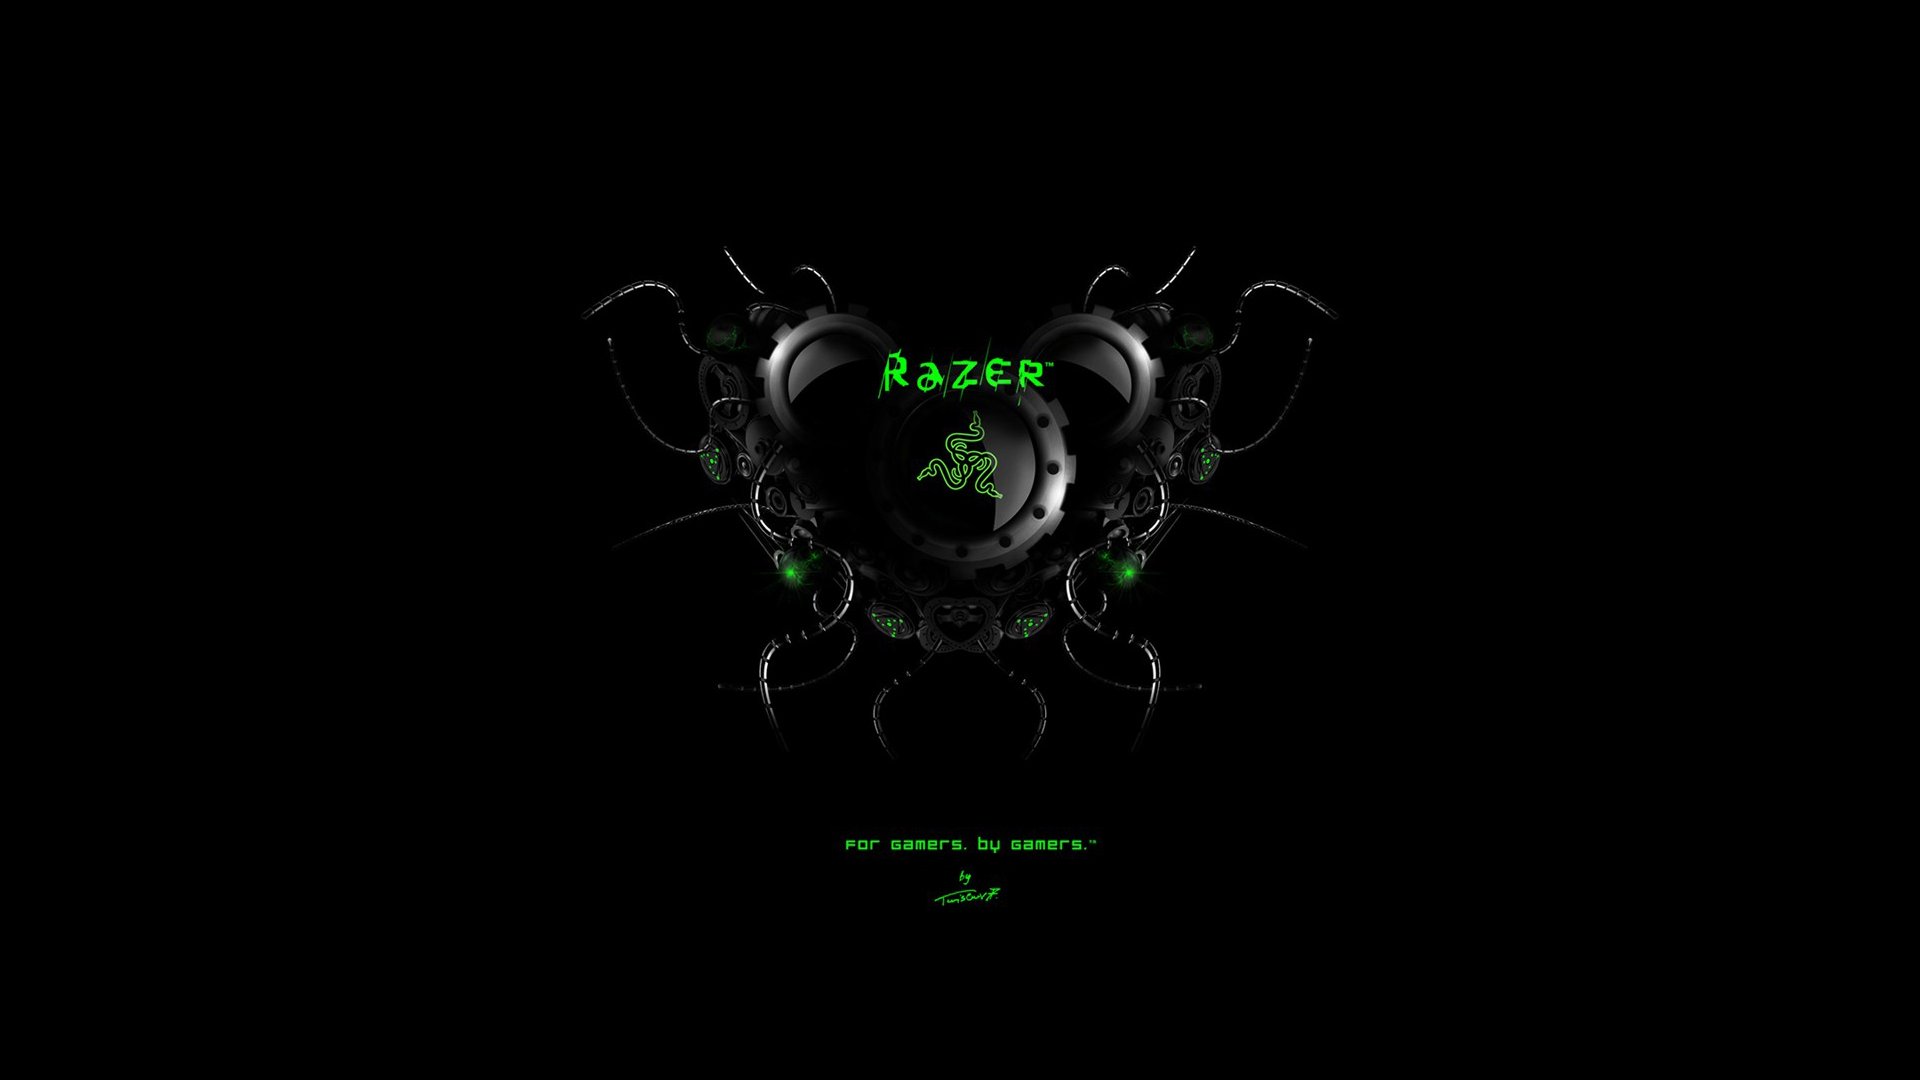 Razer Logo Iphone Wallpaper Razer logo black background hd 1920x1080